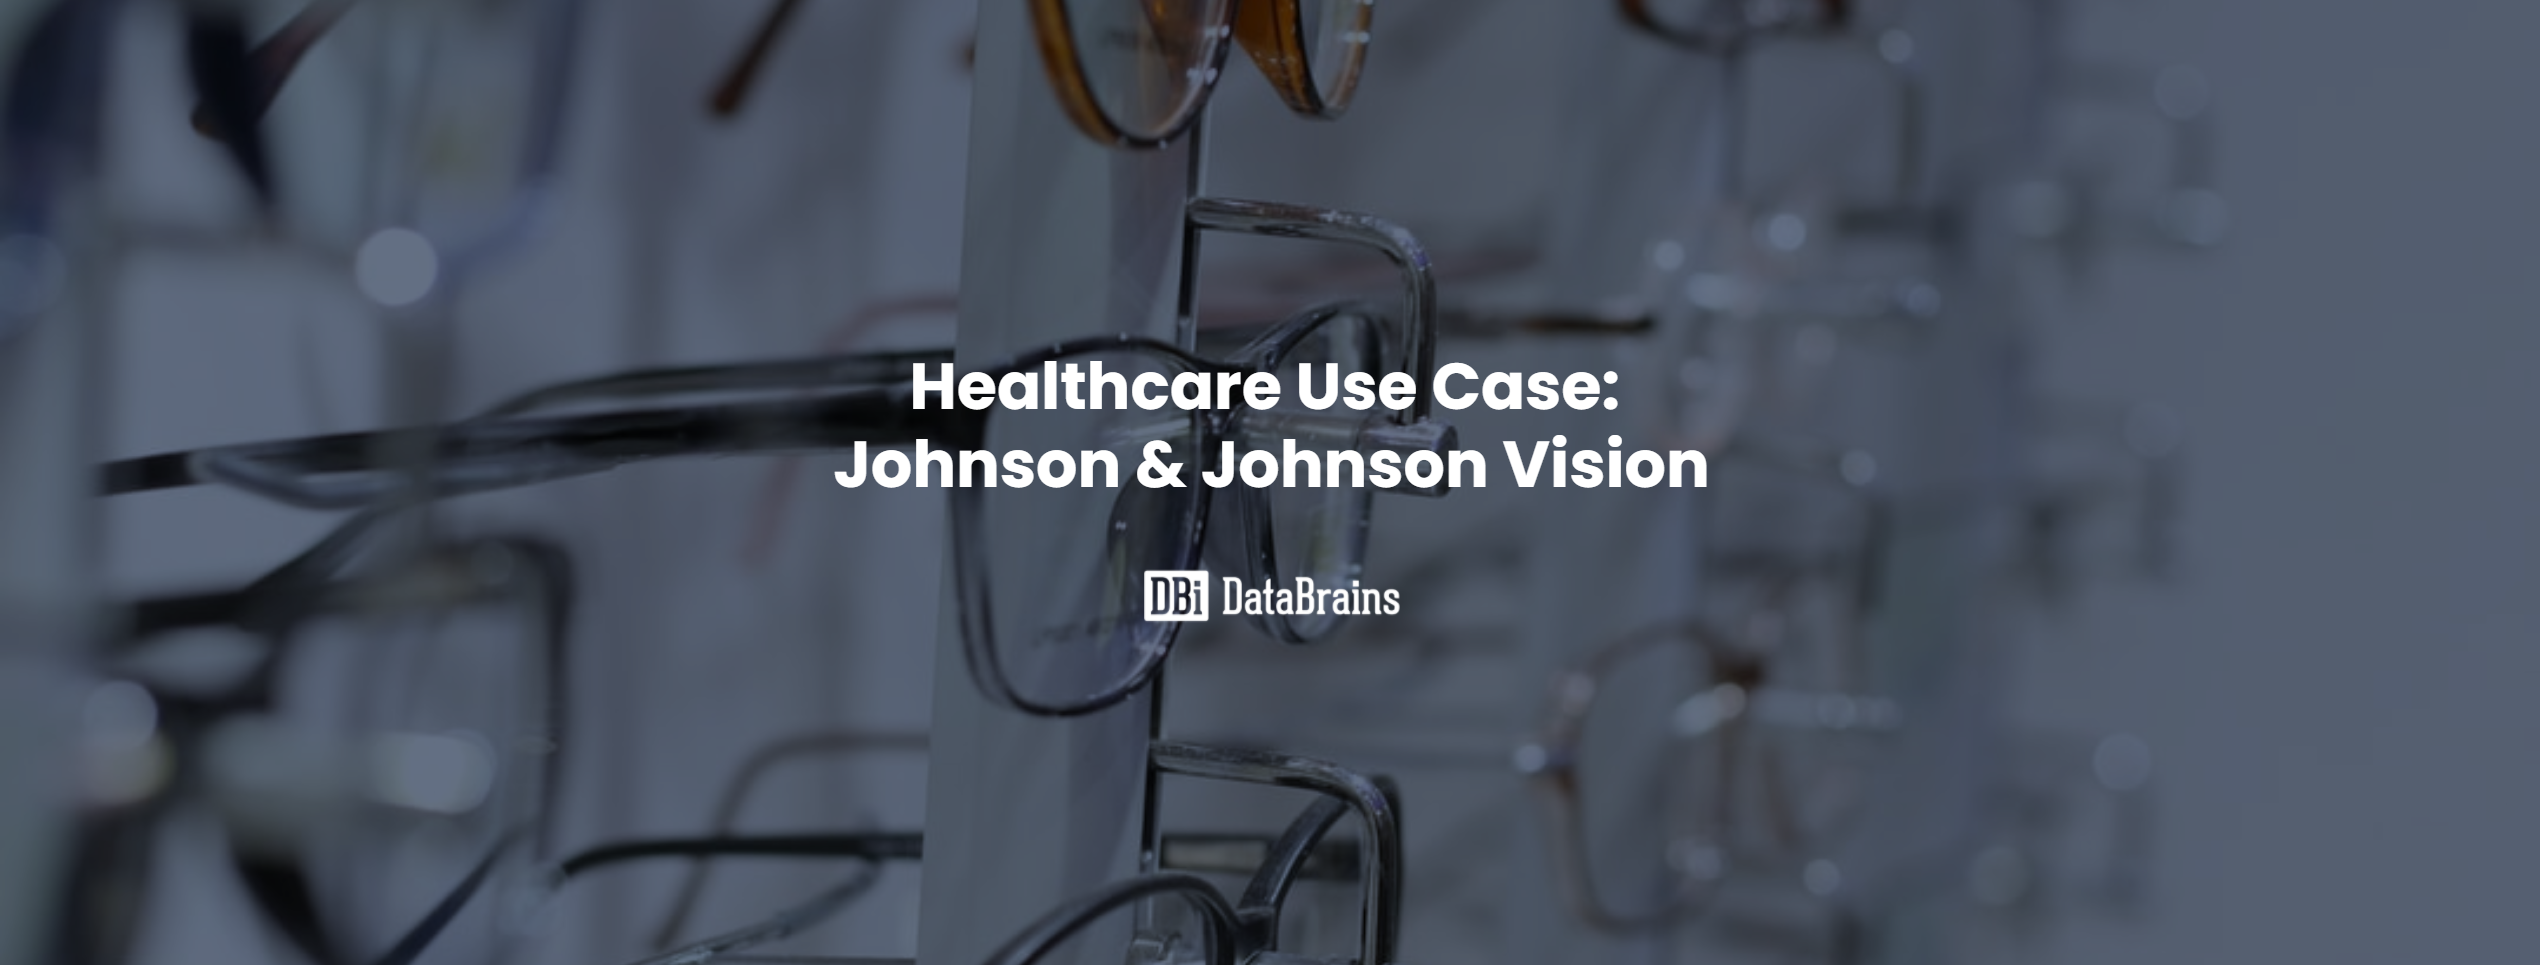 Healthcare Use case: Johnson & Johnson Vision